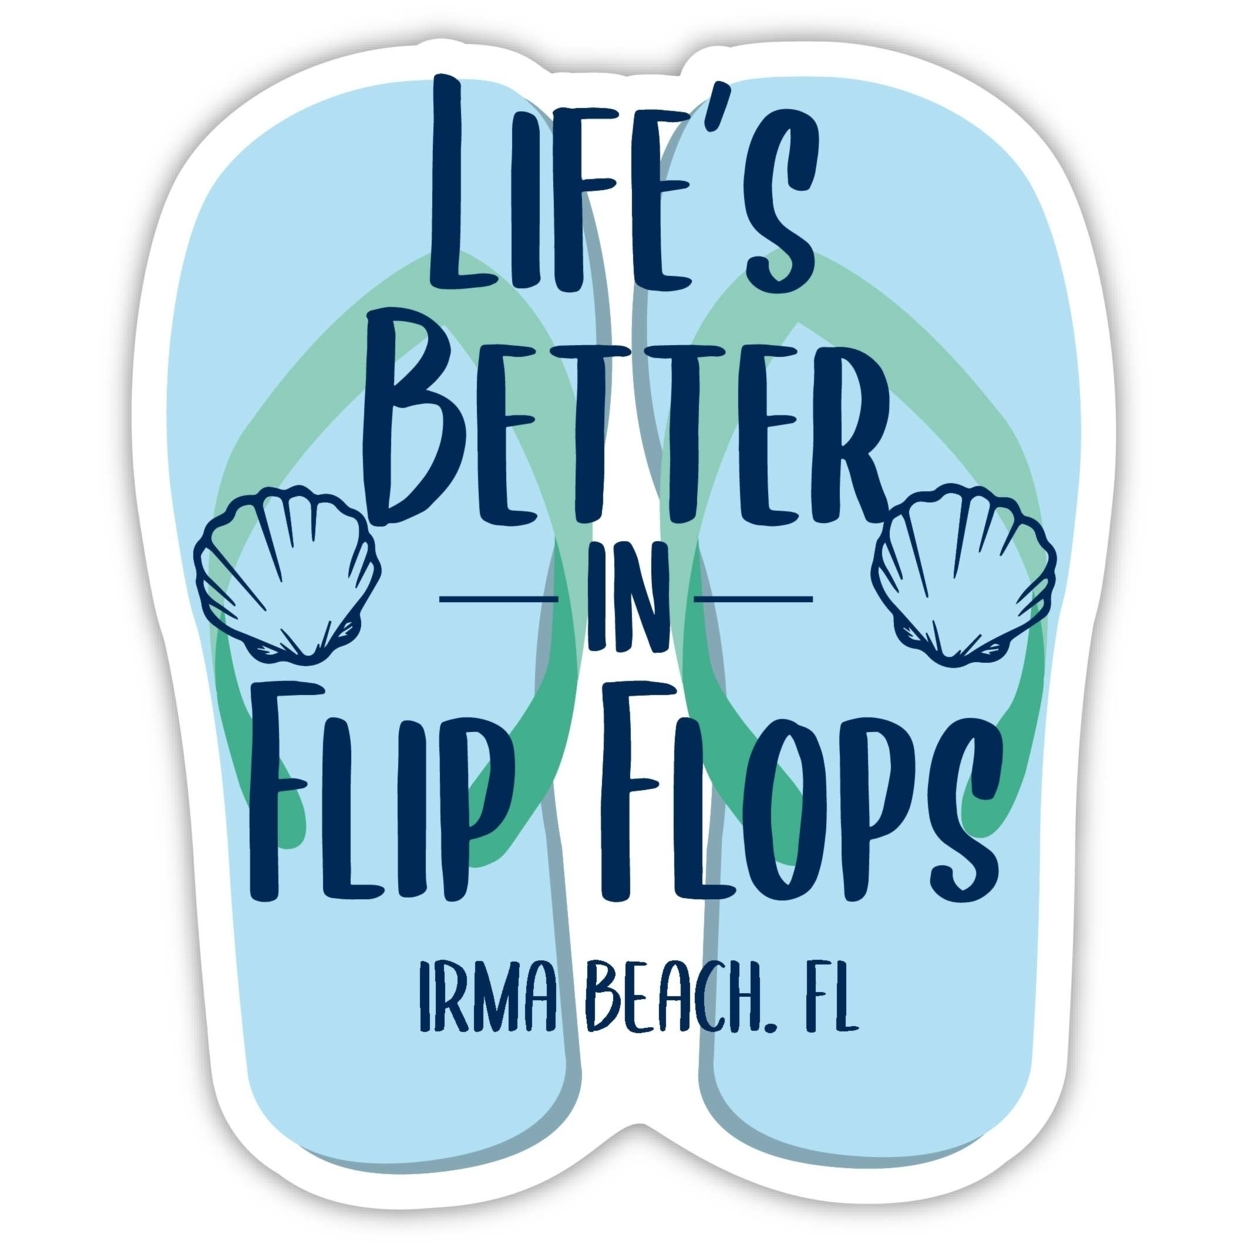 Irma Beach Florida Souvenir 4 Inch Vinyl Decal Sticker Flip Flop Design